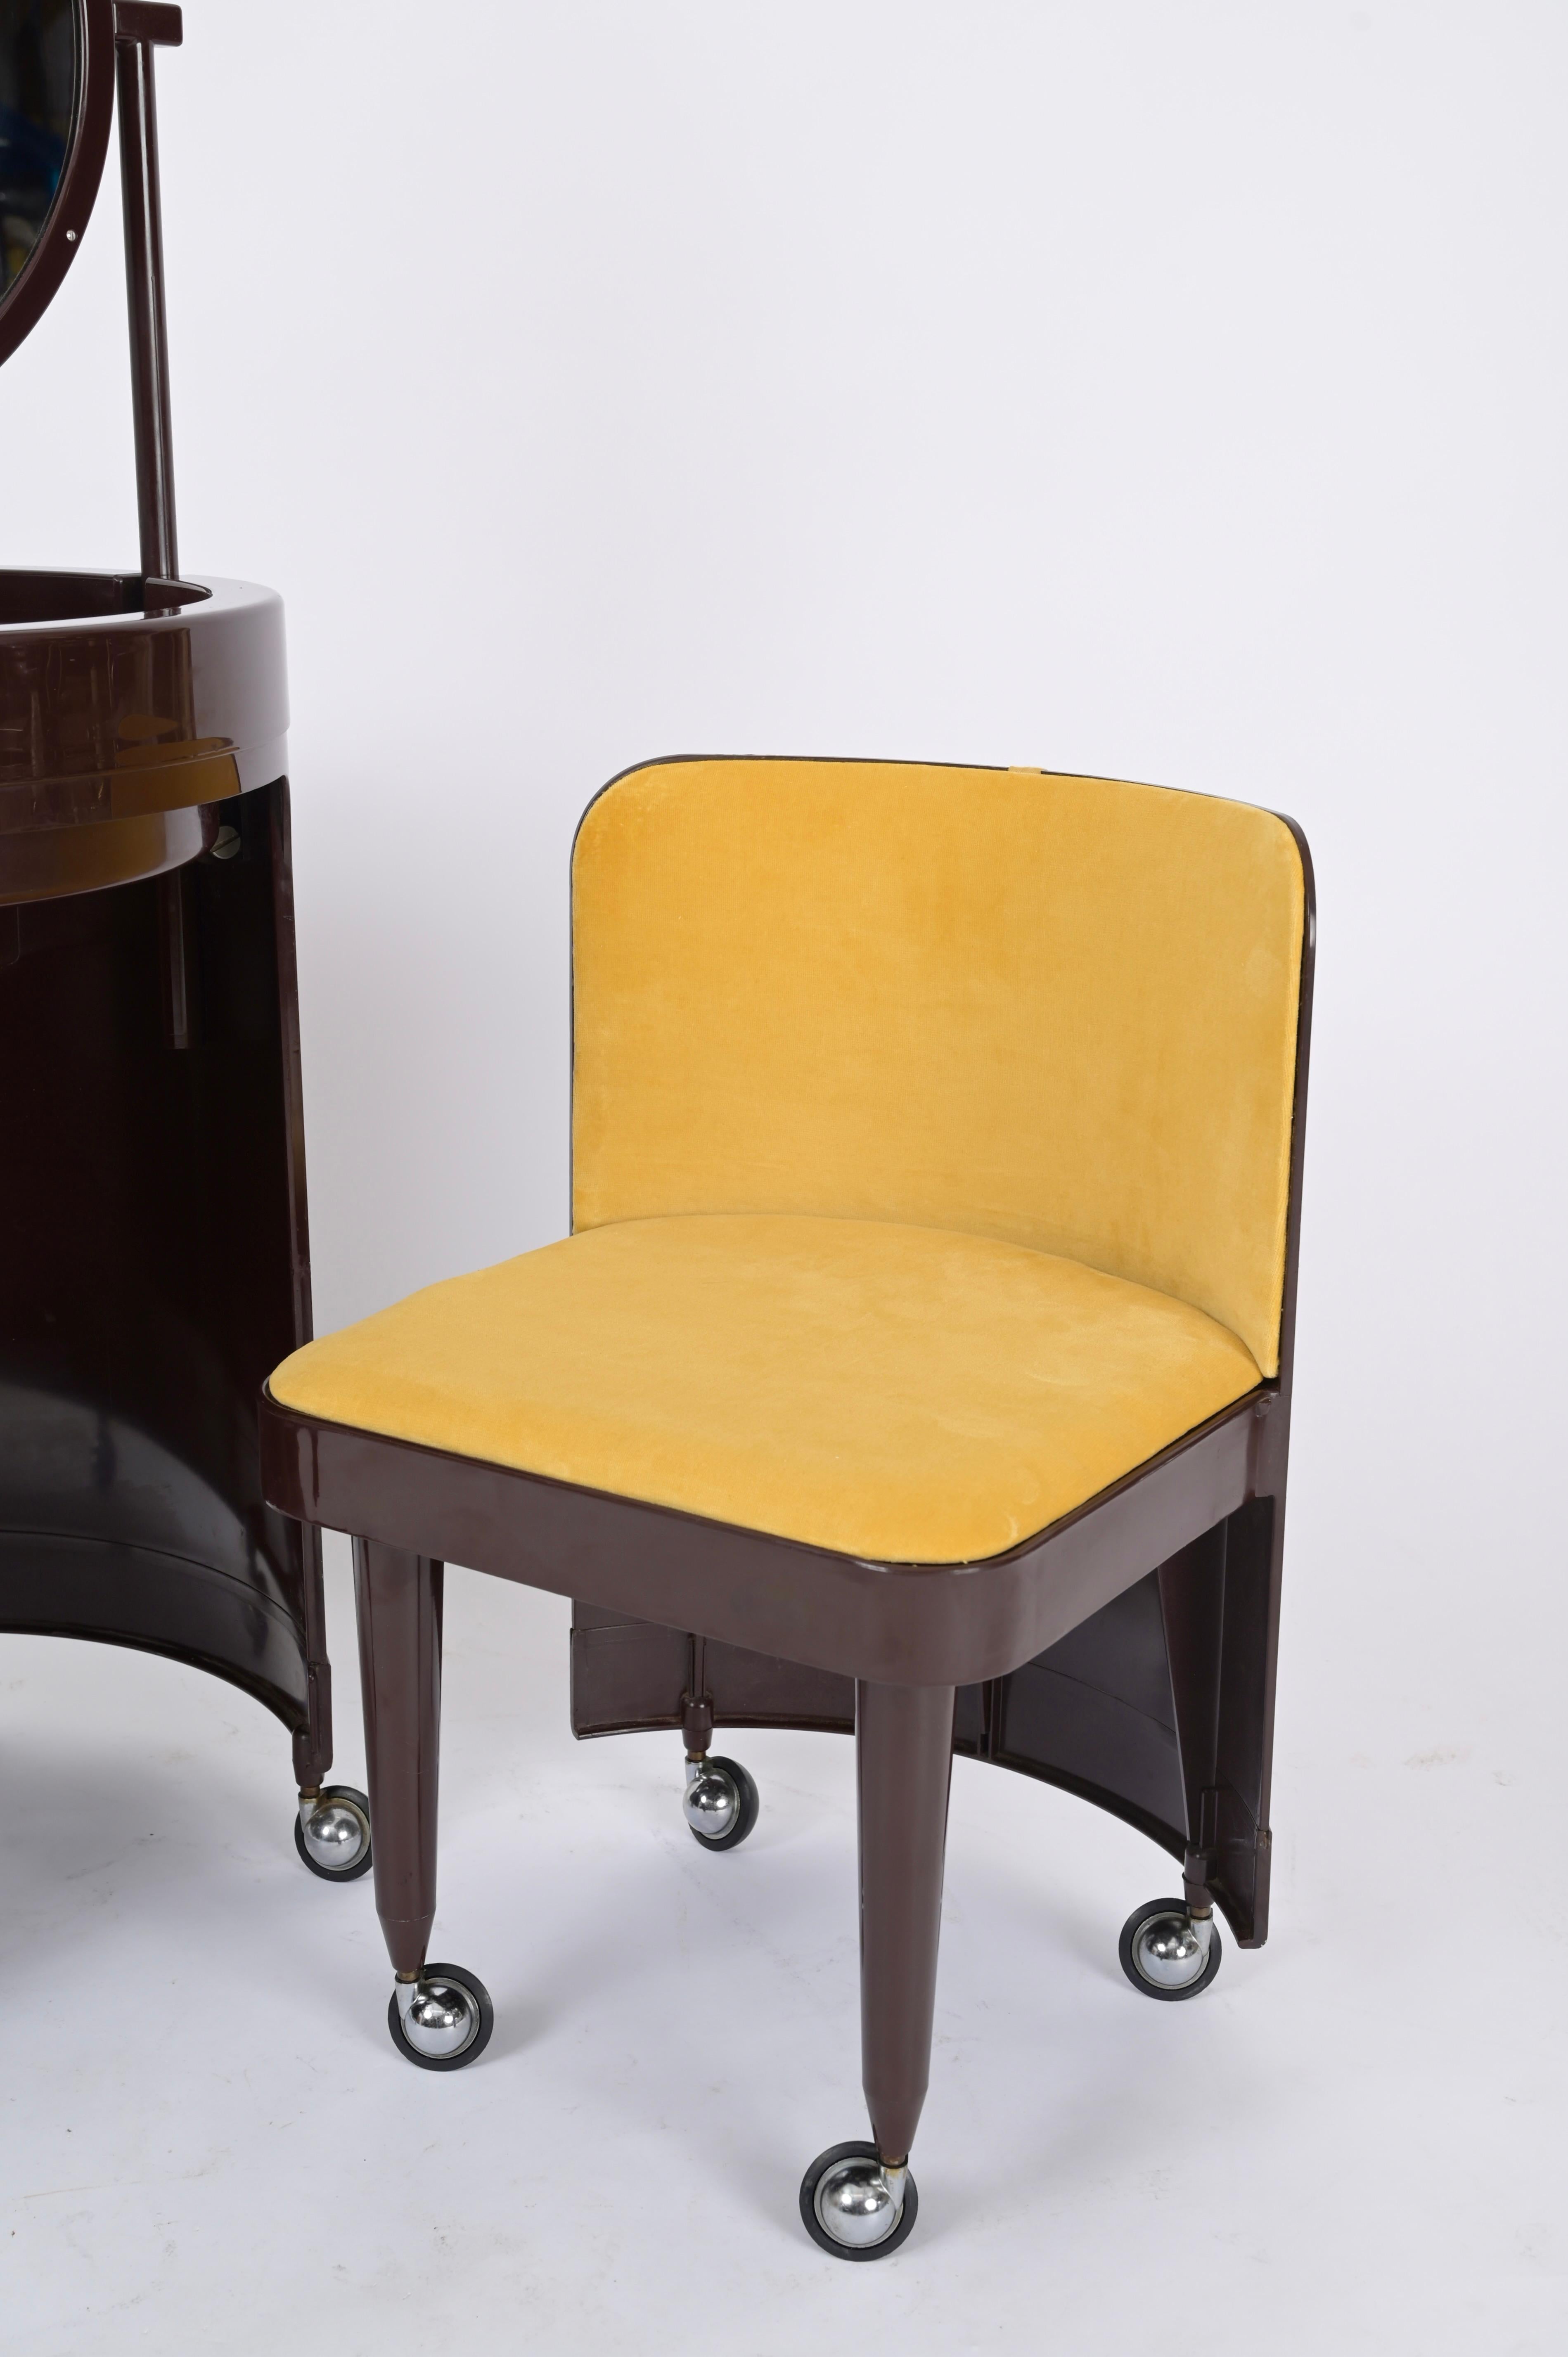 Studio Kastilia Silvi, Italian Brown Vanity Table with Yellow Seat, 1970s For Sale 5